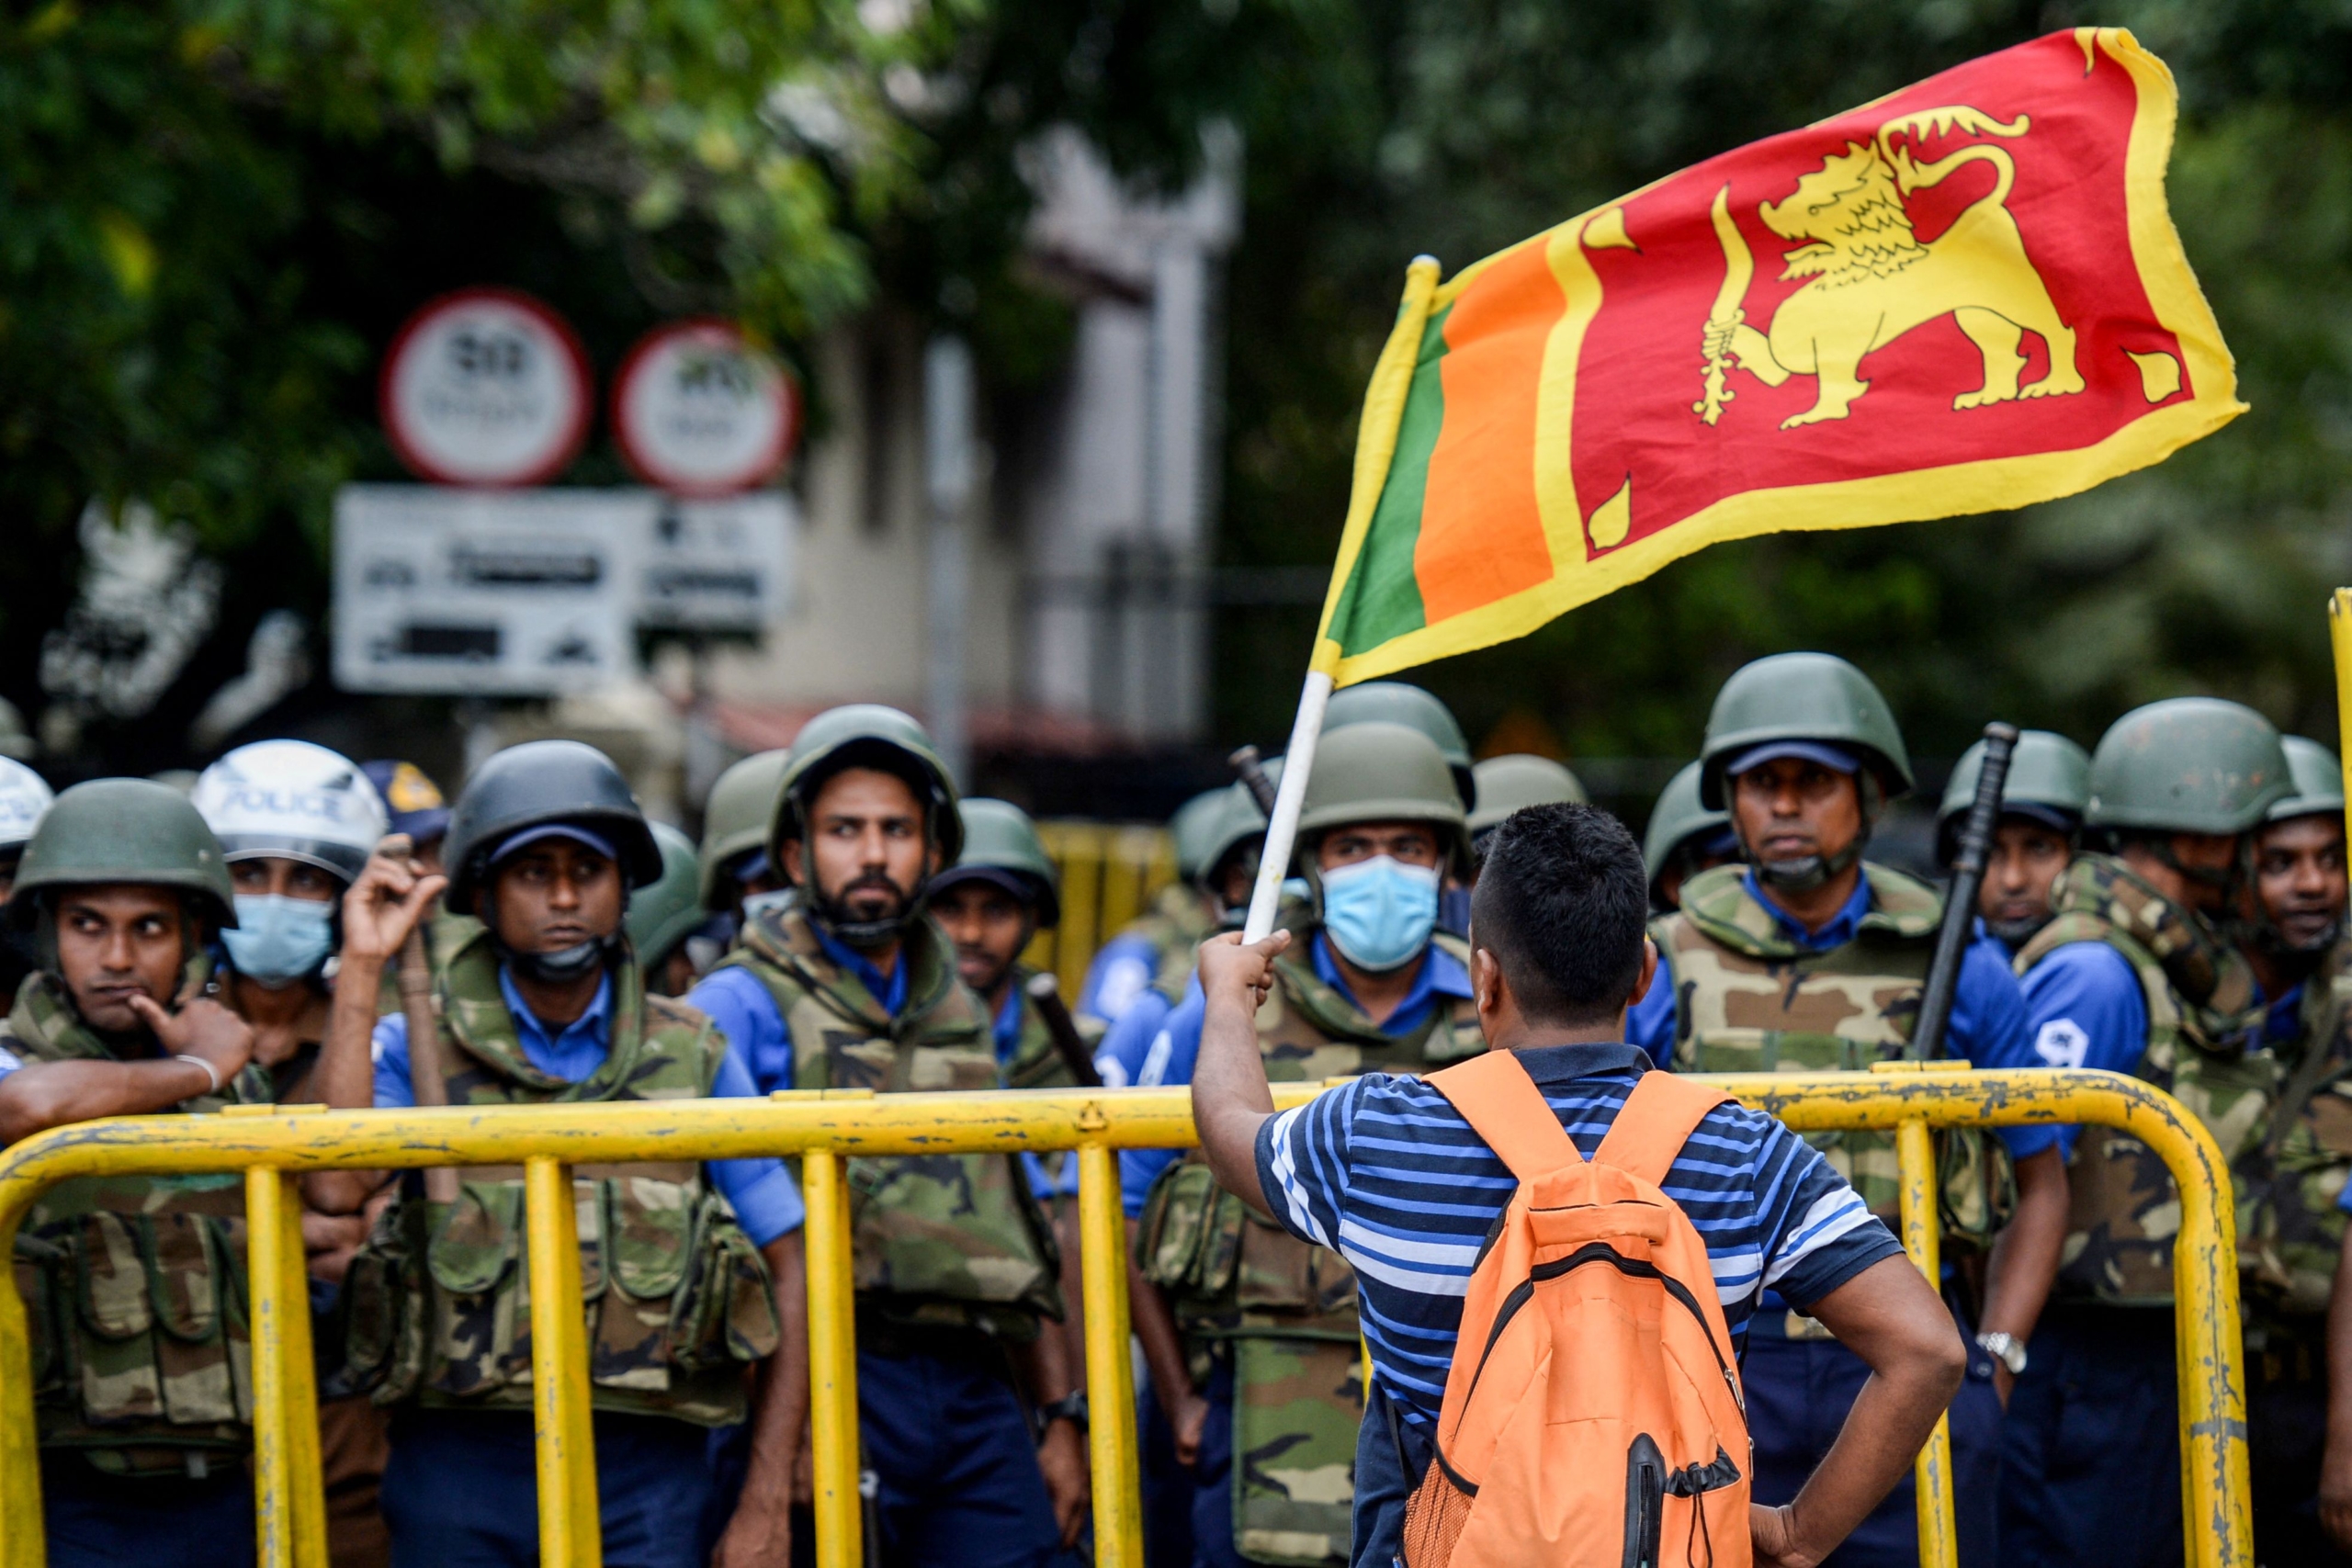 Sri Lanka: Online Safety Act major blow to freedom of expression. - Amnesty  International